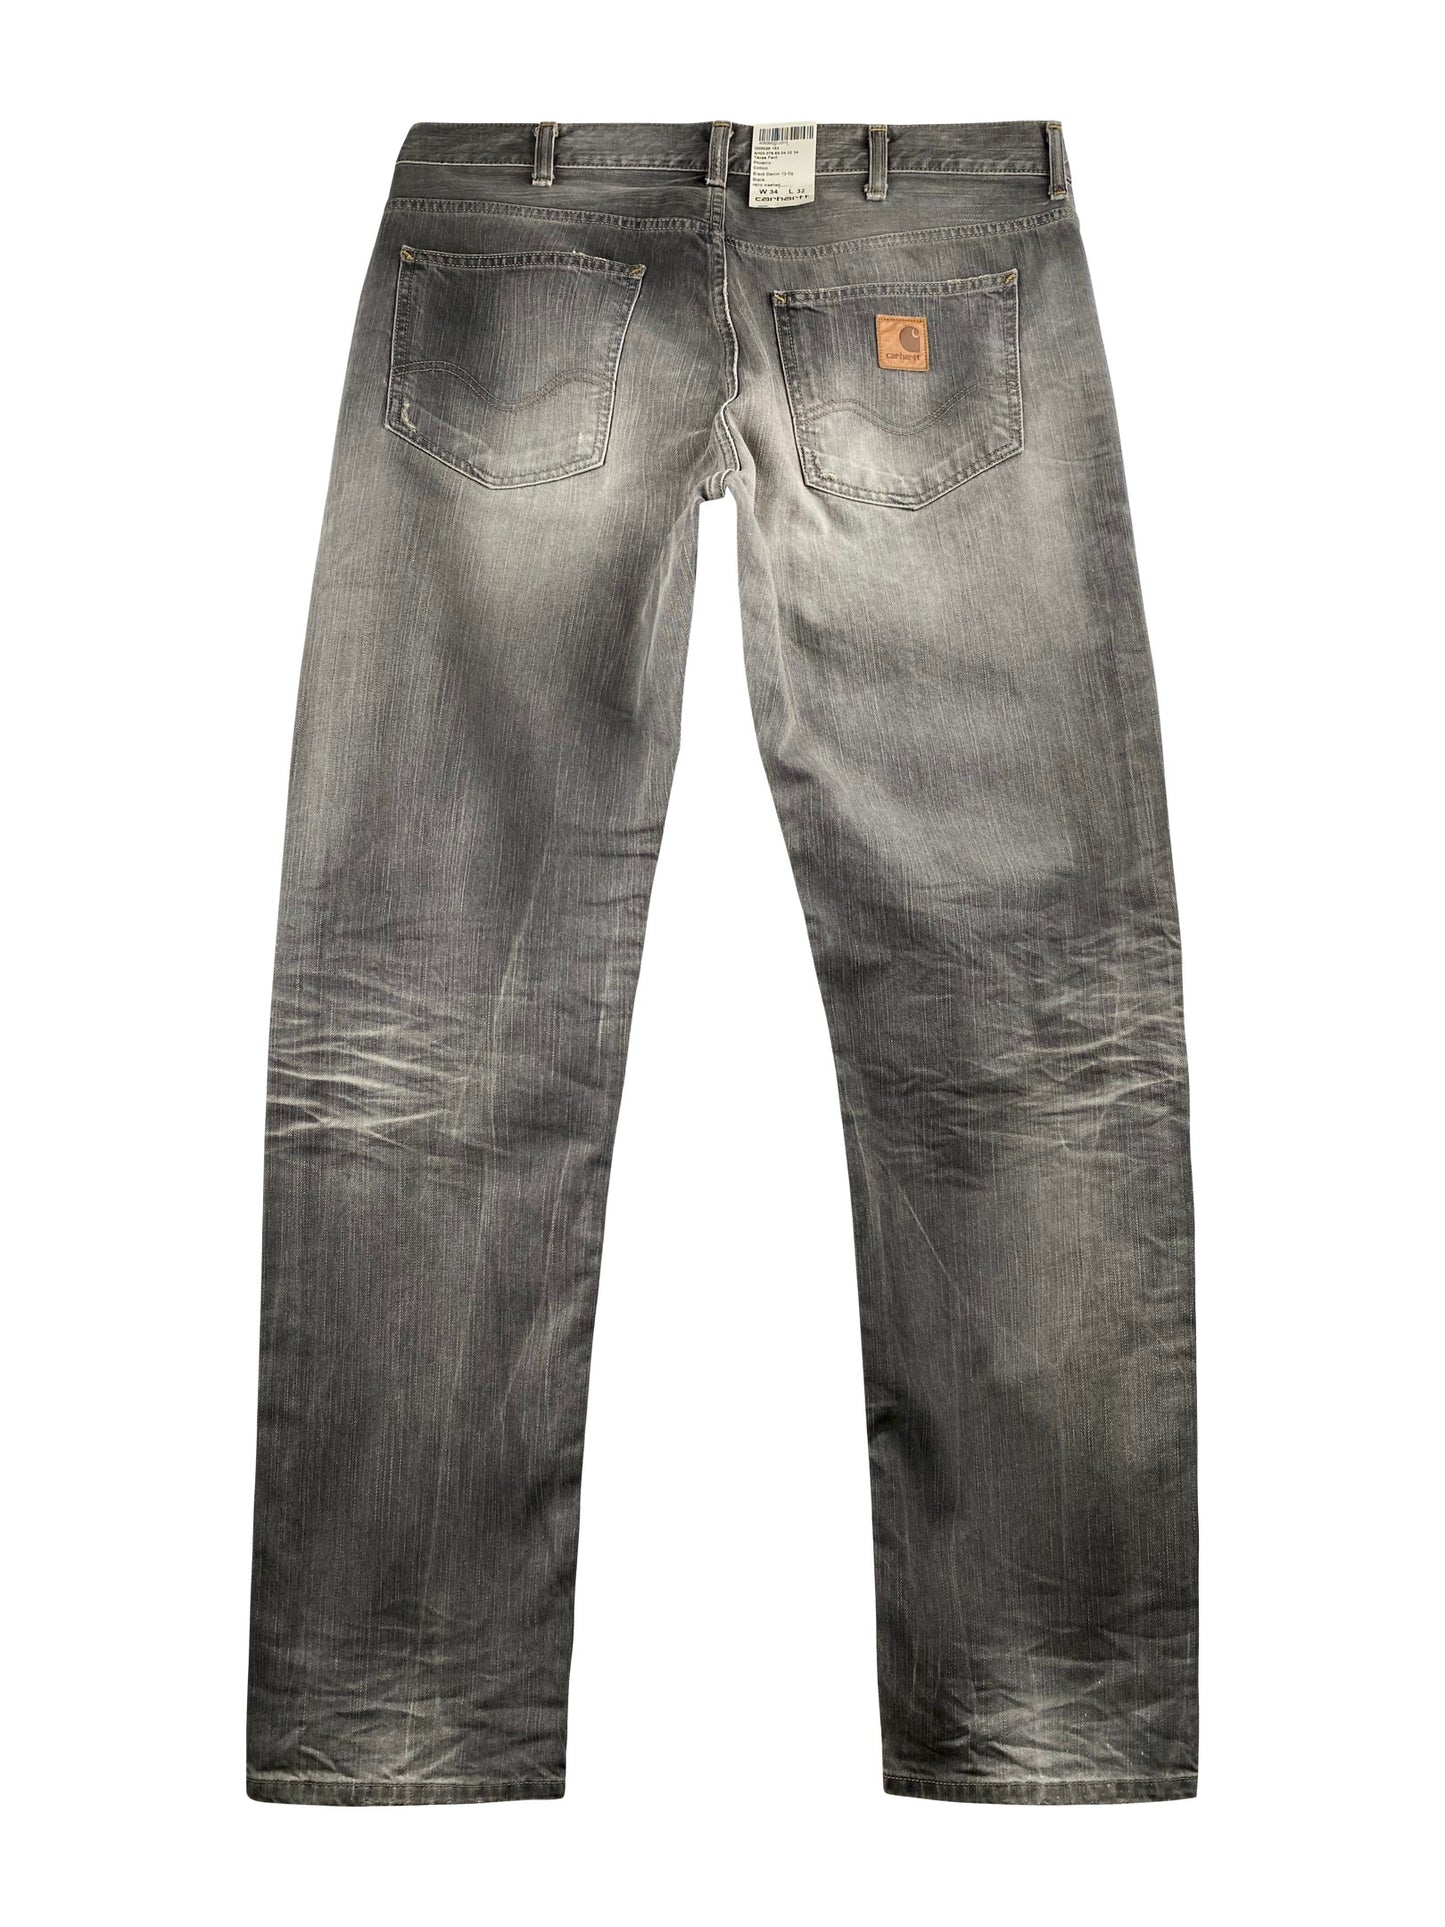 Carhartt Jeans “Texas Pant Phoenix” -black retro washed